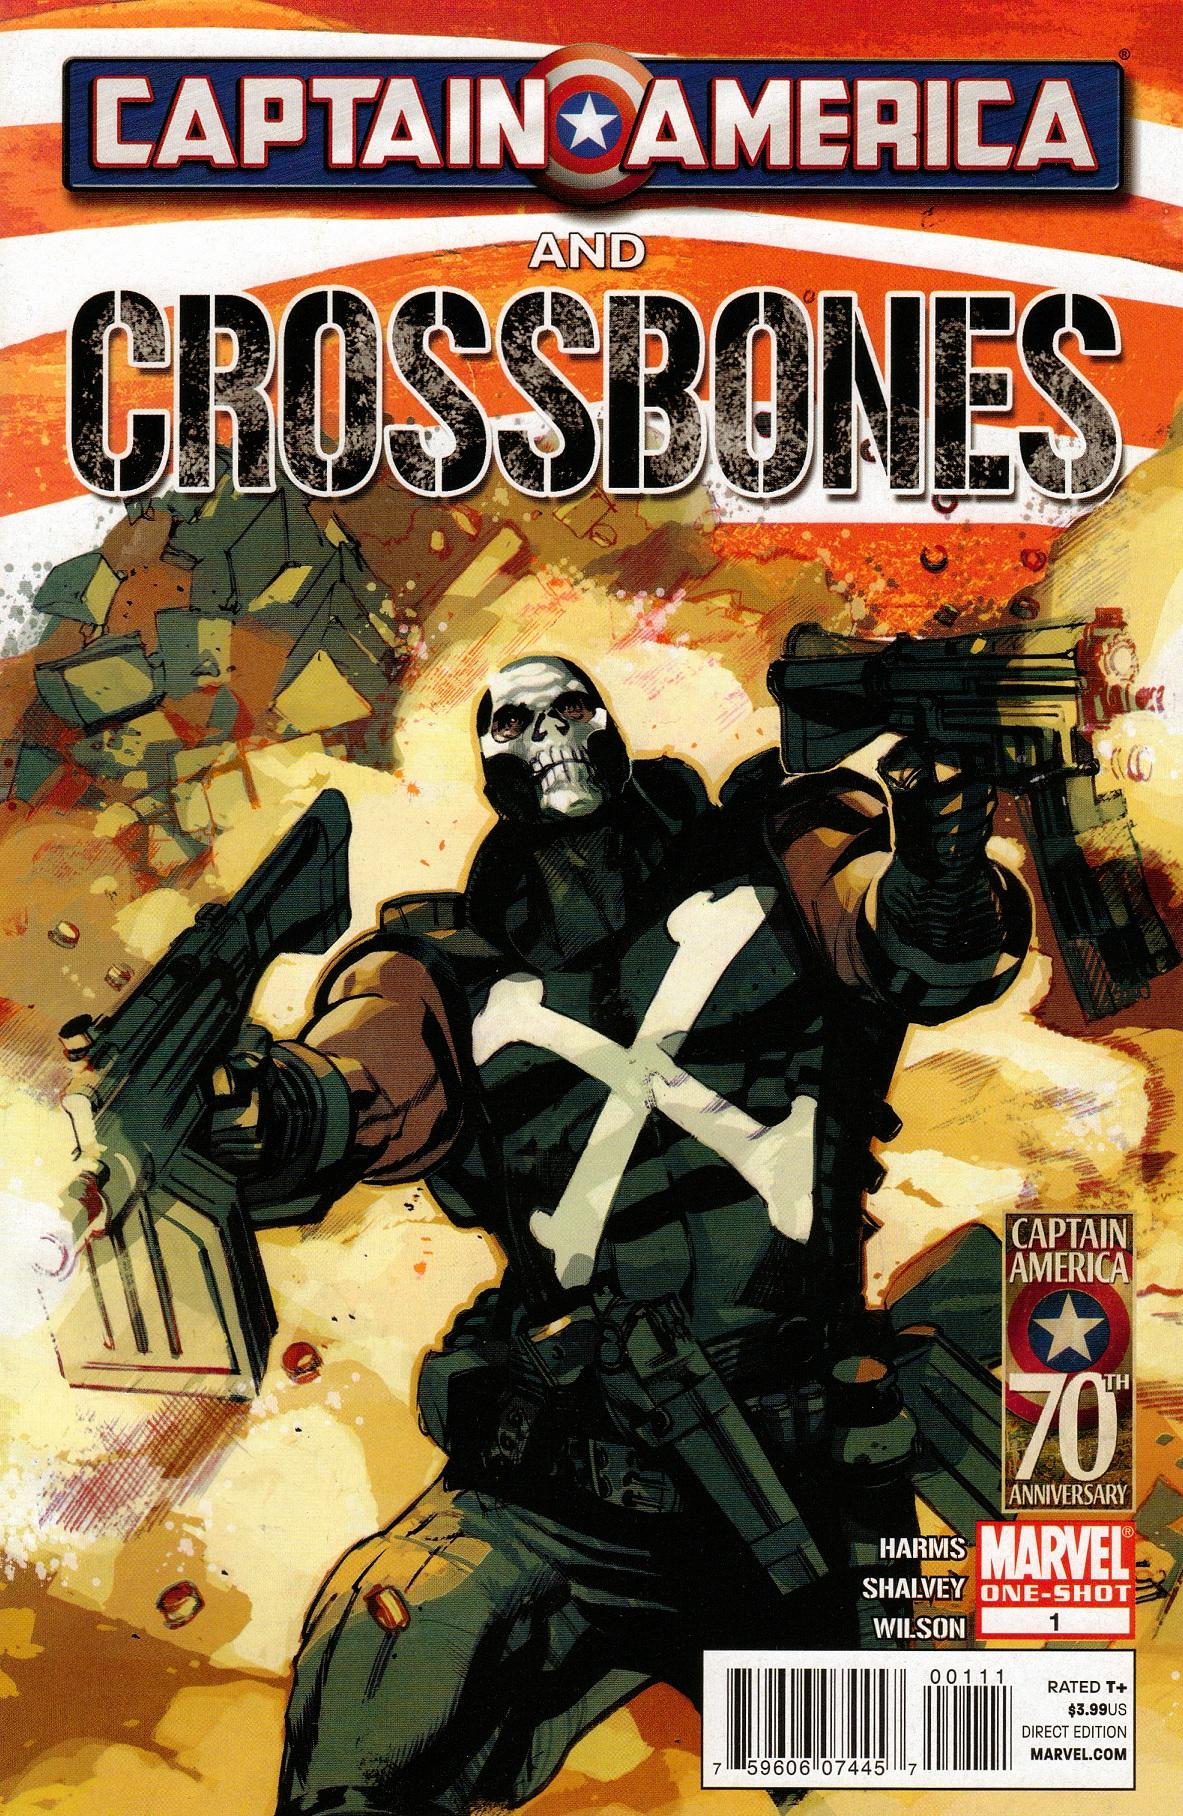 Captain America and Crossbones Vol. 1 #1